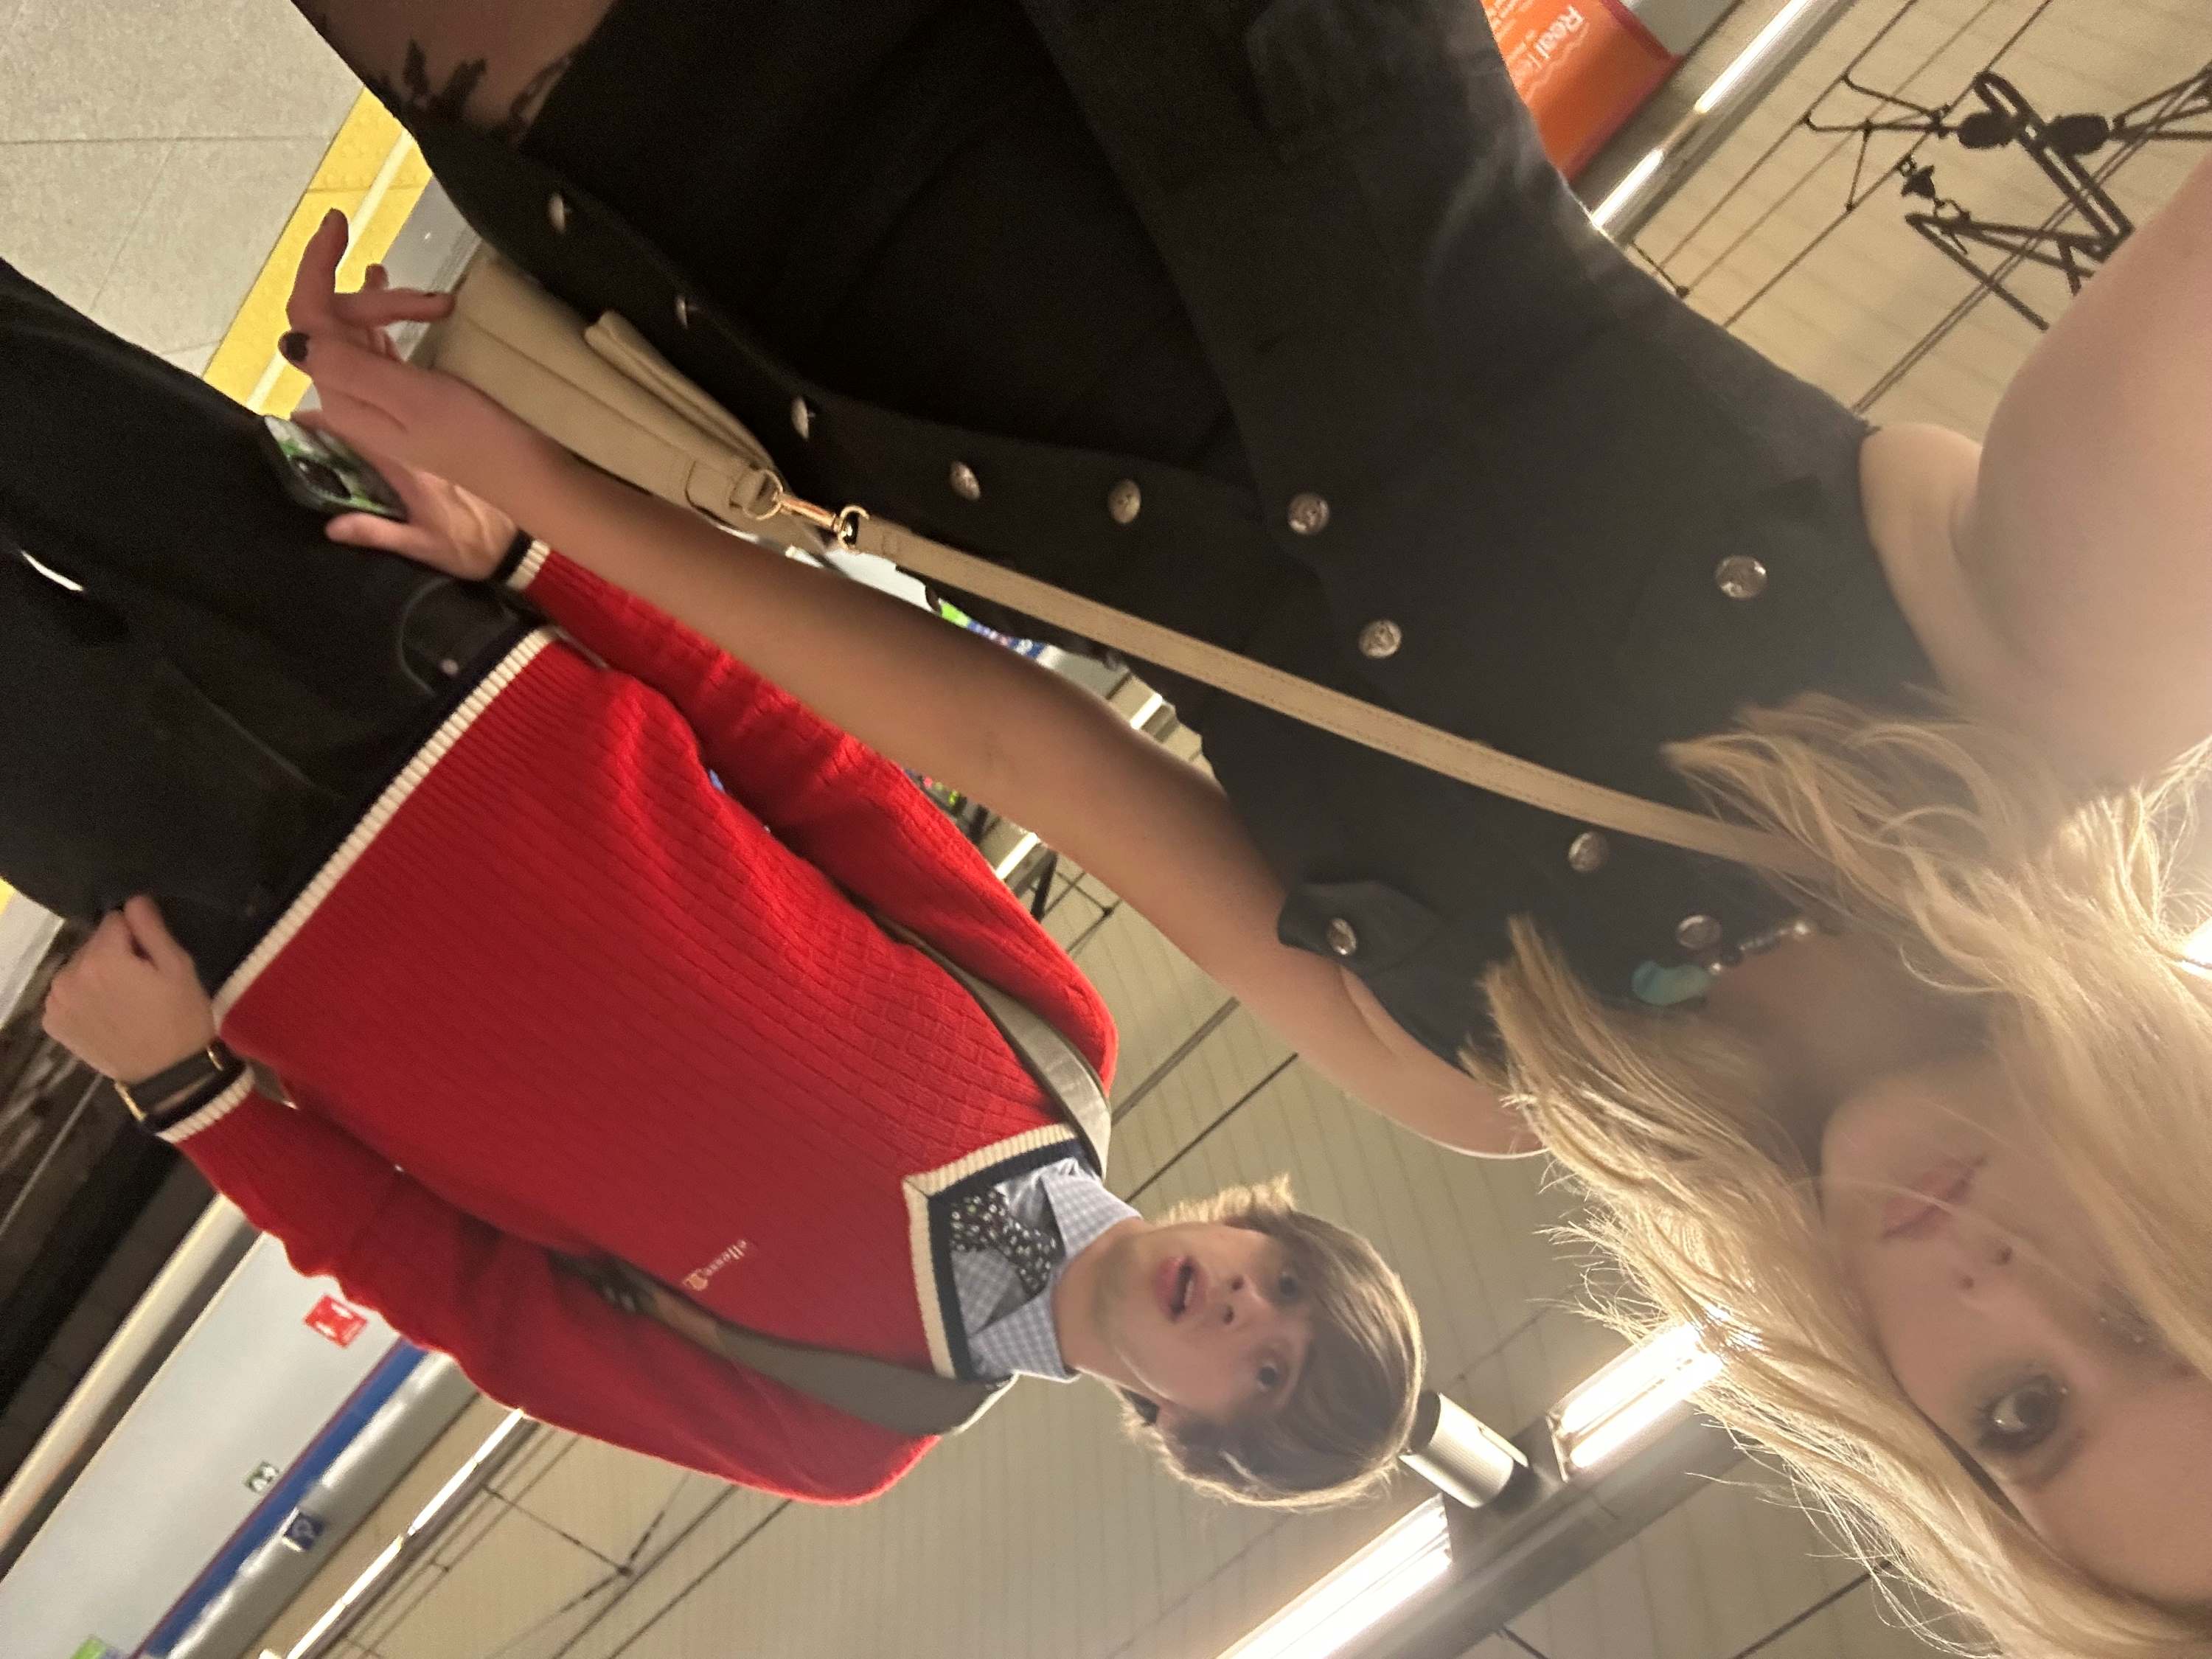 two people on train platform